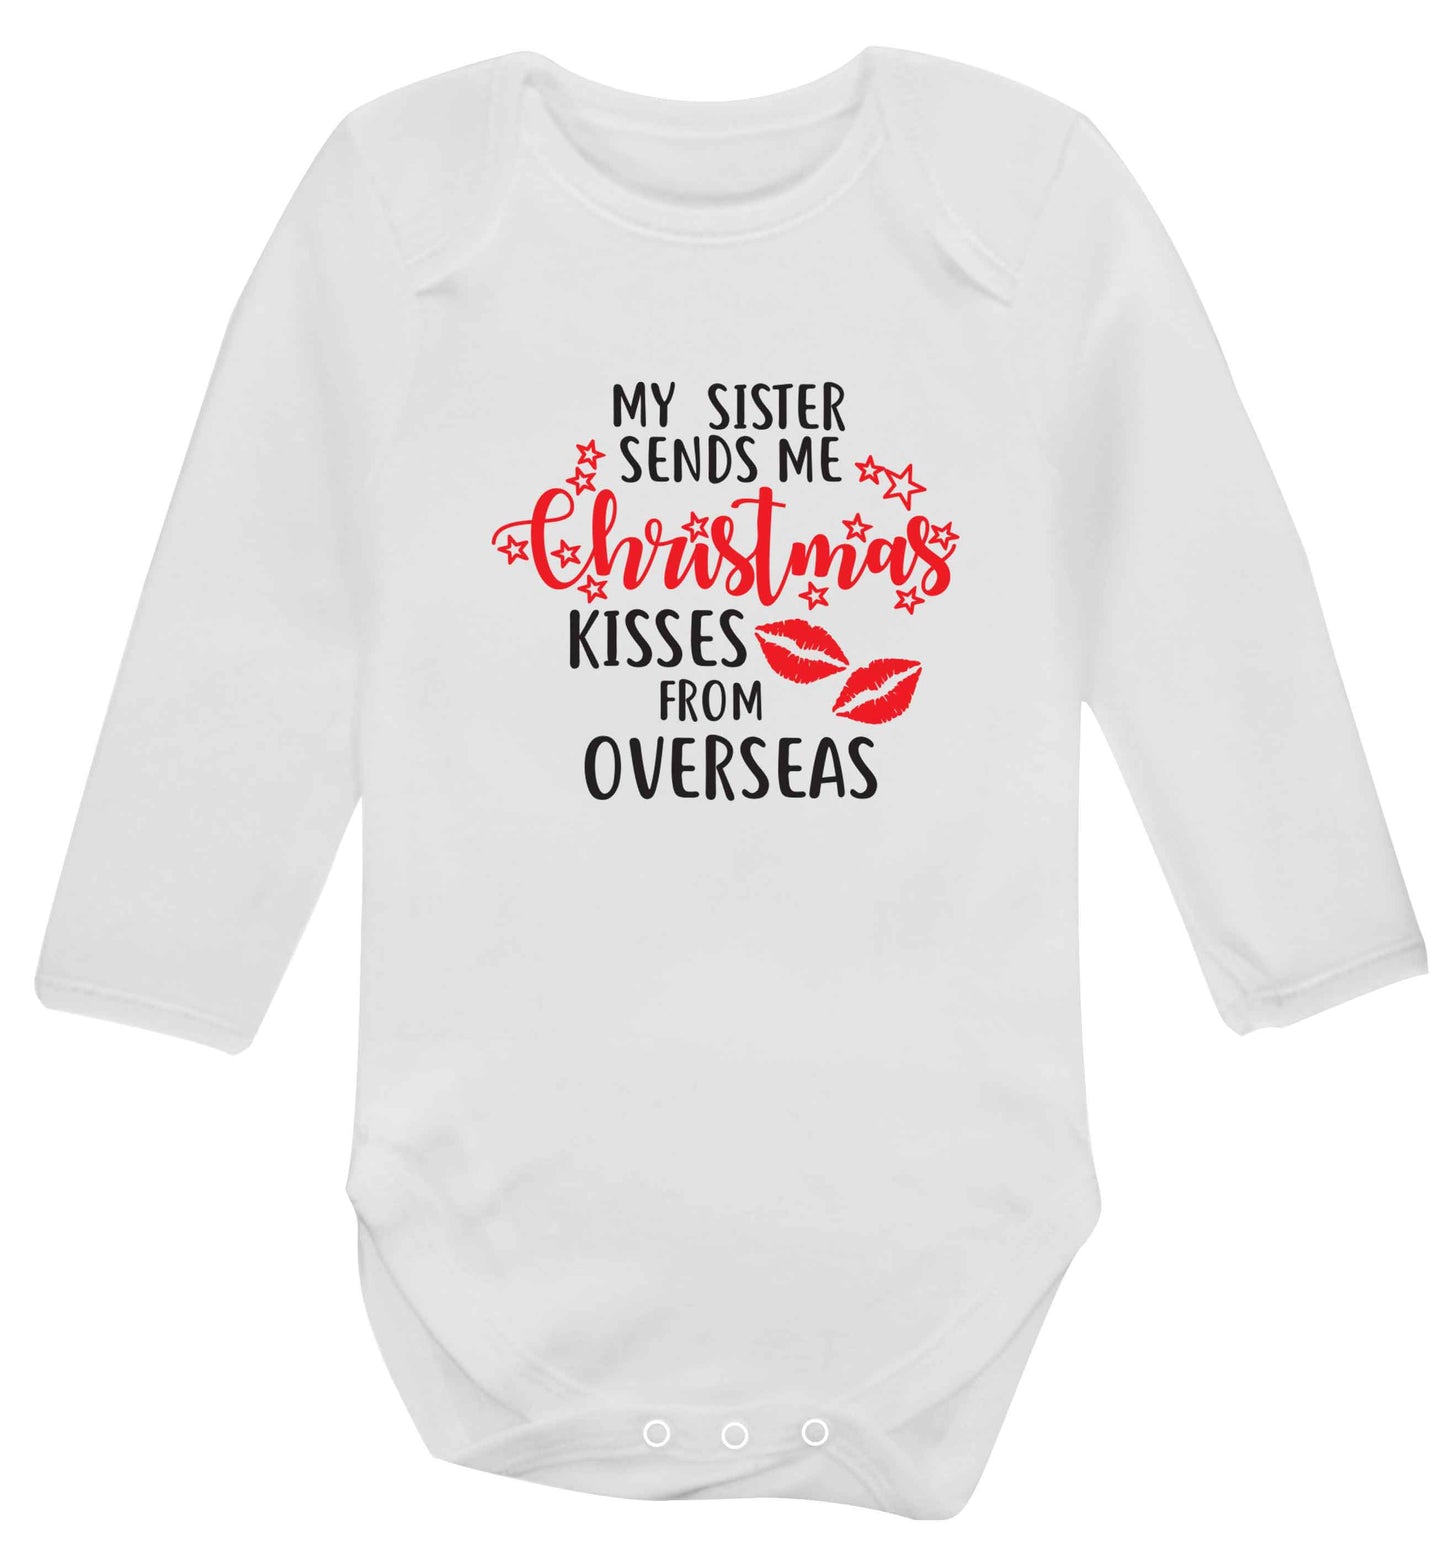 Grandad Christmas Kisses Overseas baby vest long sleeved white 6-12 months